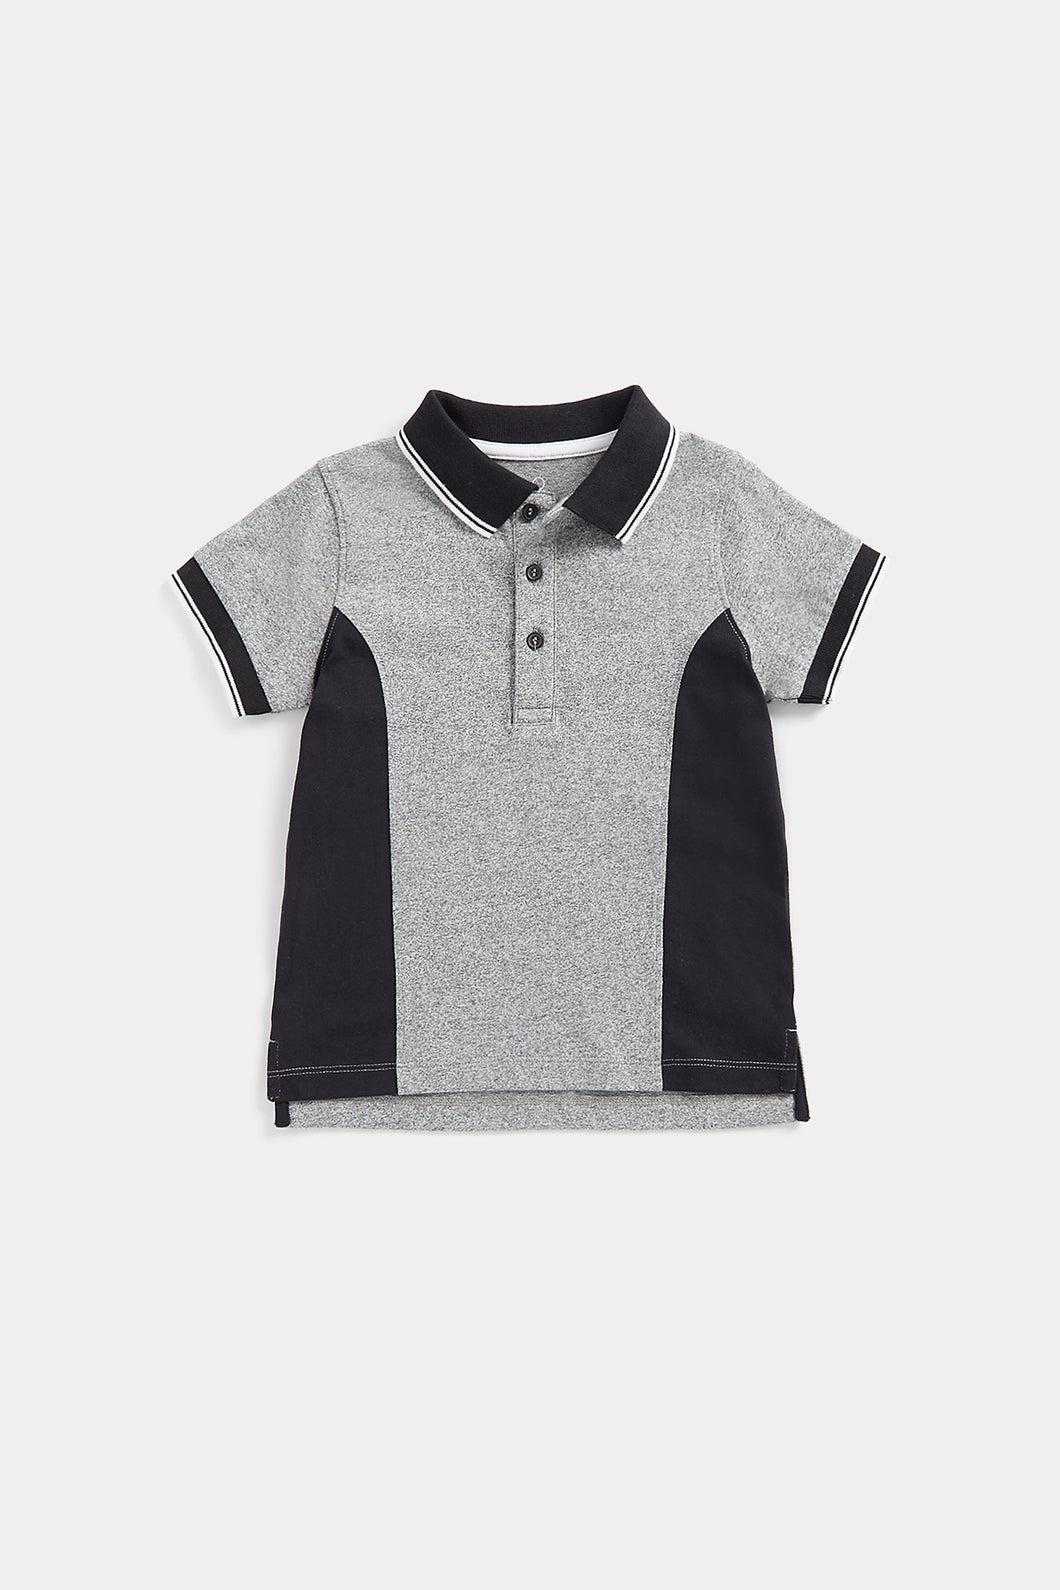 Mothercare Grey and Black Polo Shirt